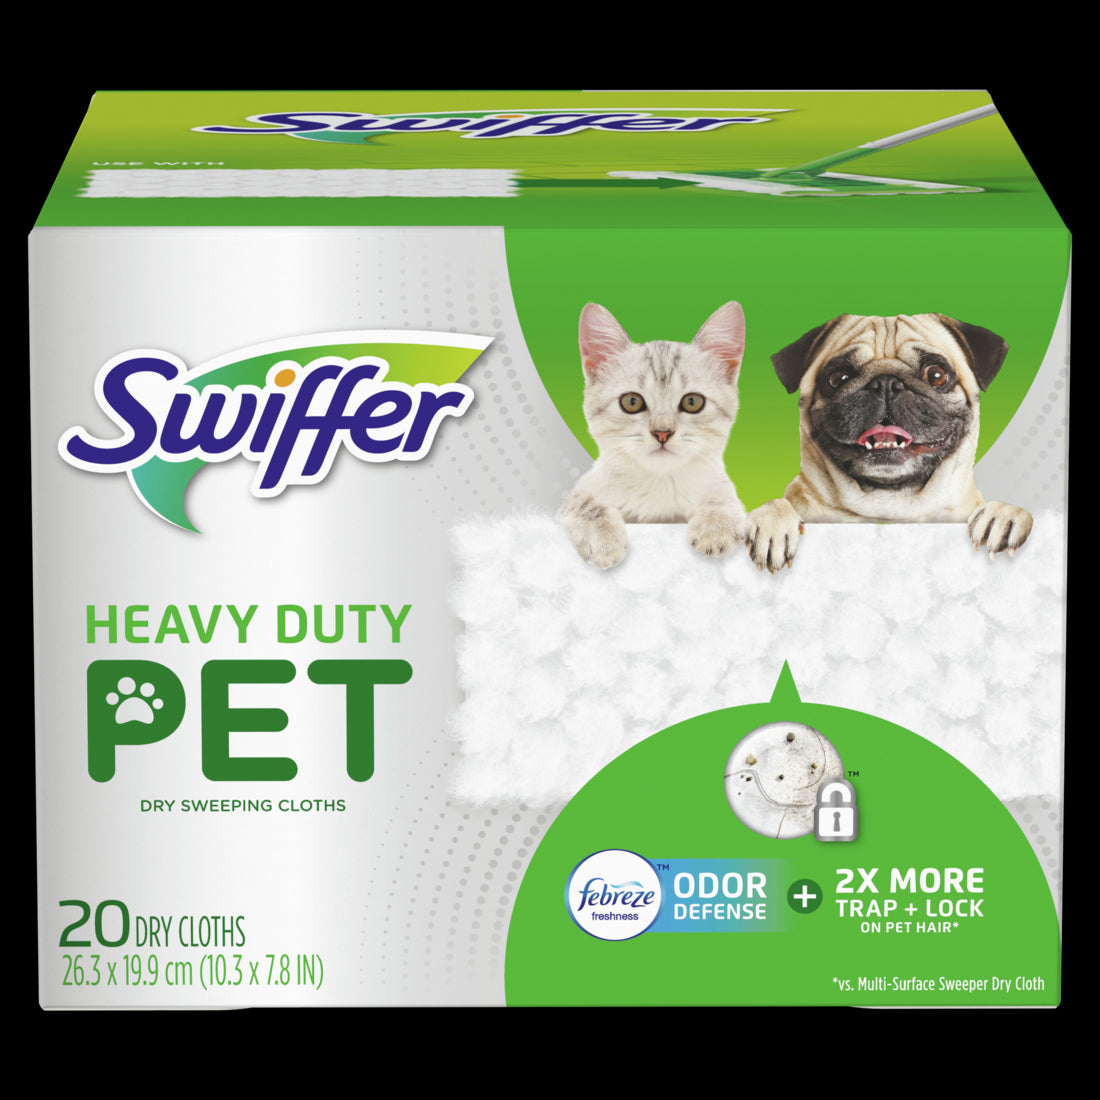 Swiffer Heavy Duty Pet Dry Sweeping Cloth Refills Febreze Odor Defense - 20ct/4pk